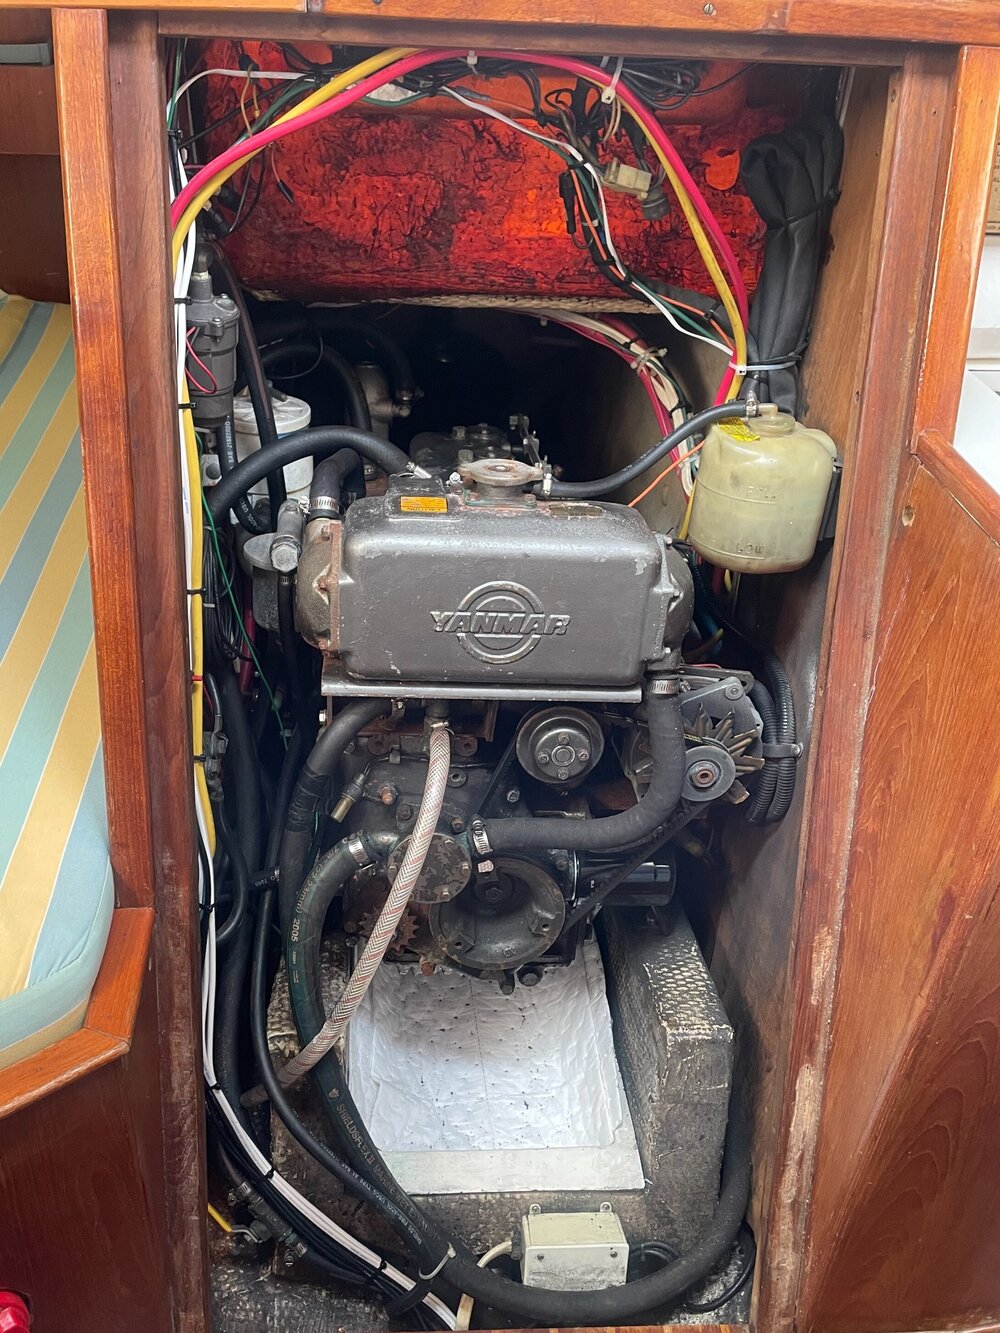 The Original 1978 Yanmar 3QH30 Engine